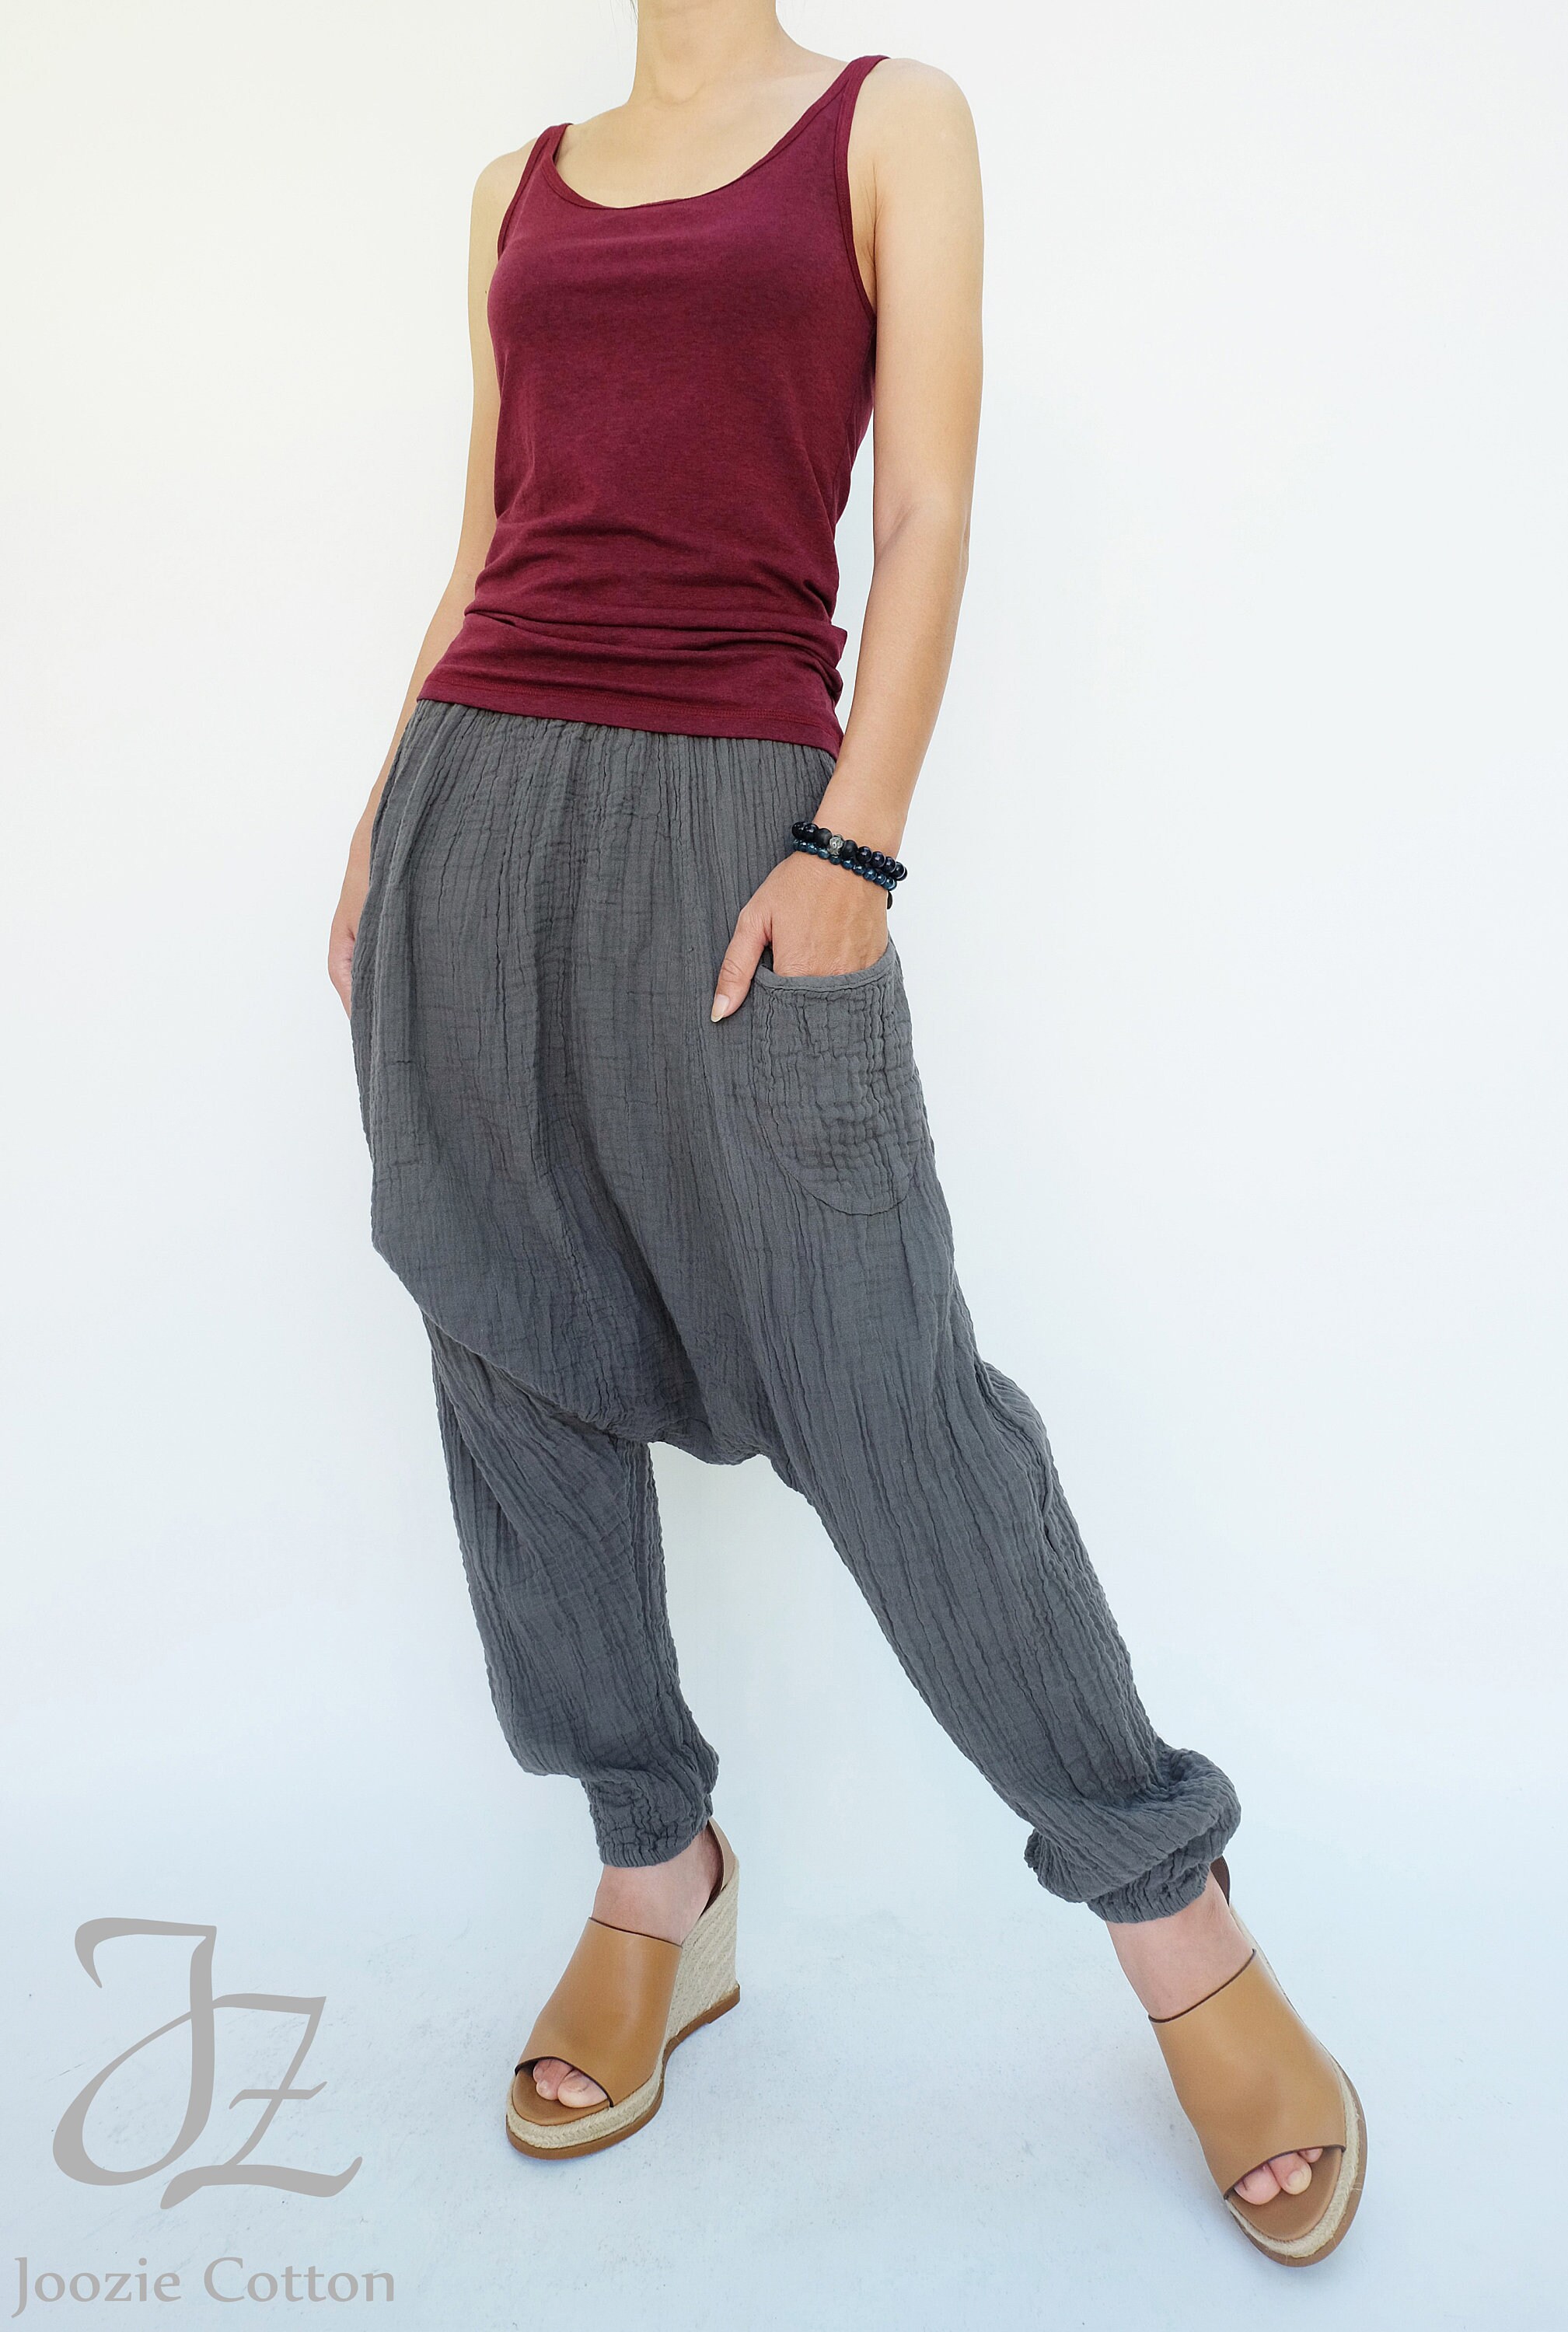 NO.162 Women's Patch Pocket Drop Crotch Harem Pants | Etsy